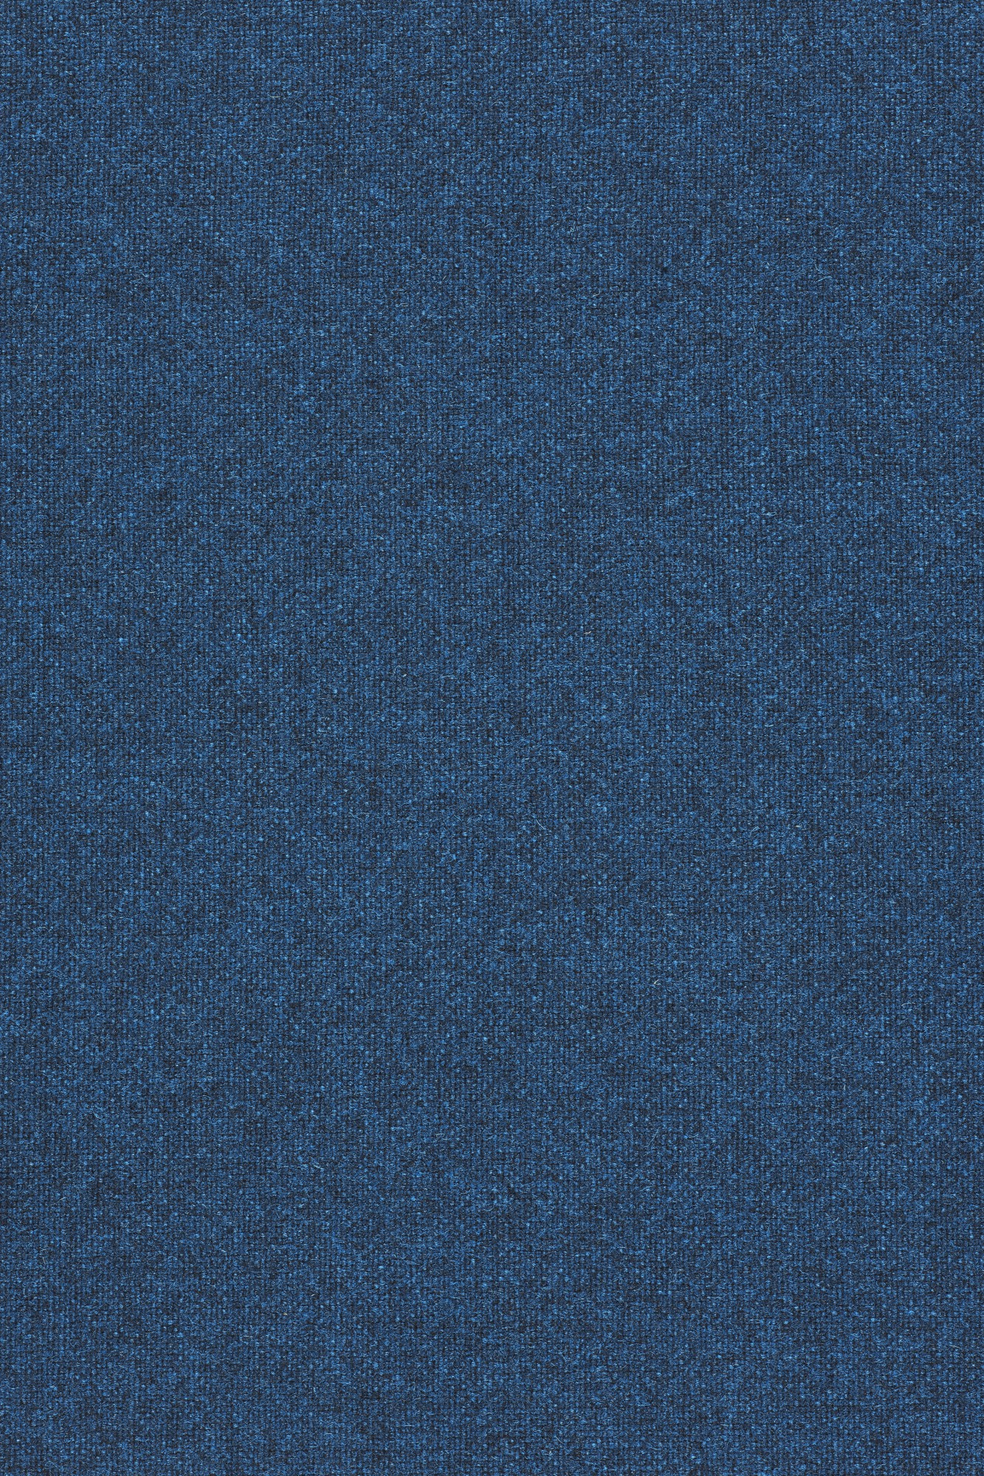 Fabric sample Tonica 2 773 blue